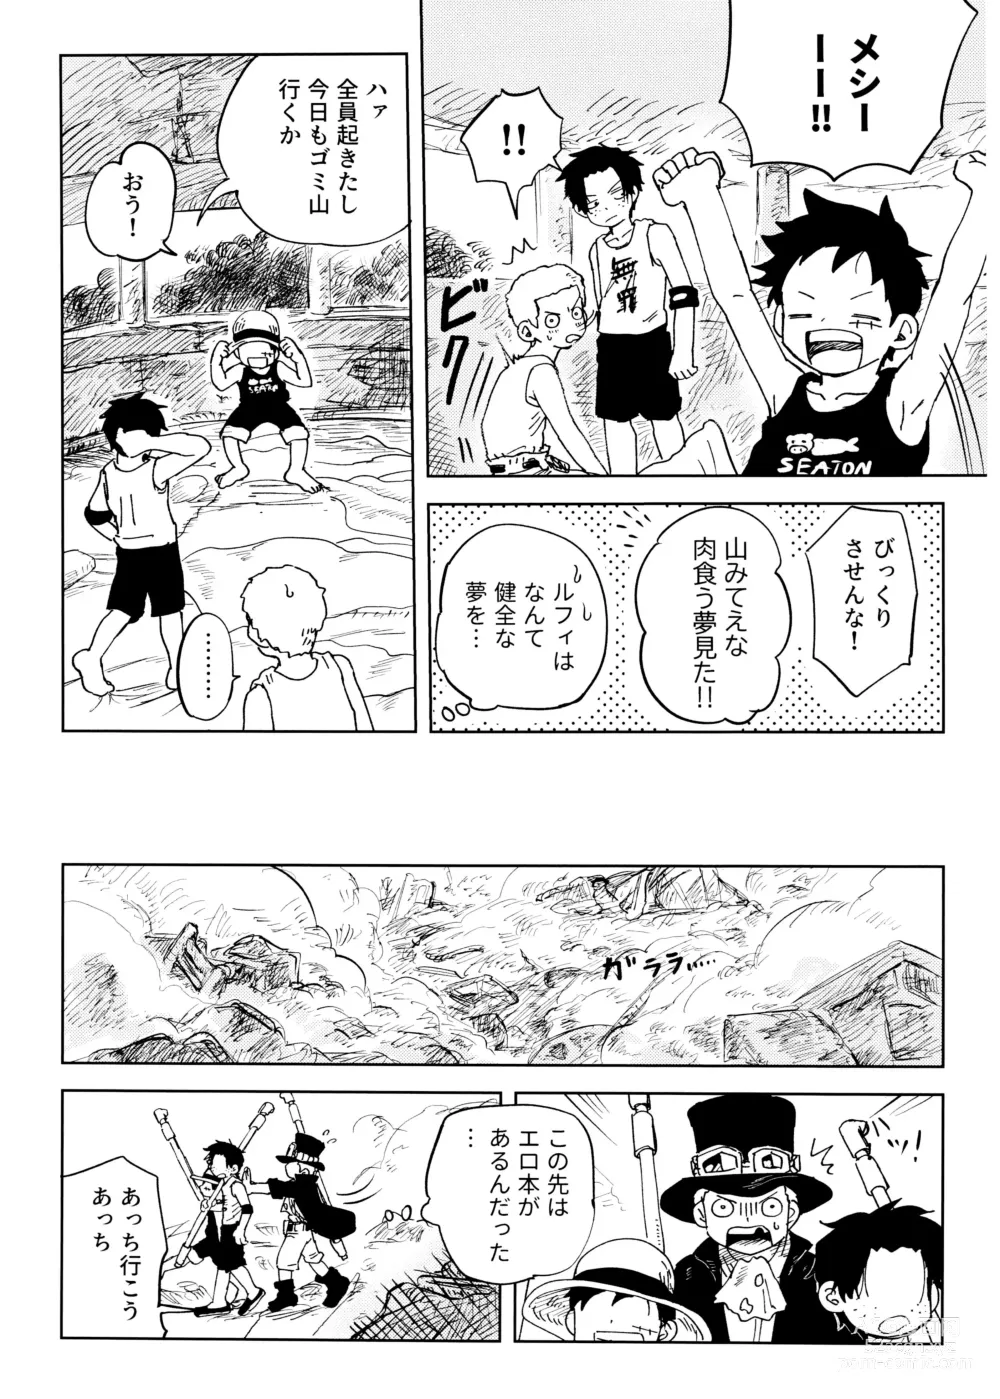 Page 16 of doujinshi Himitsu no Colubo Yama